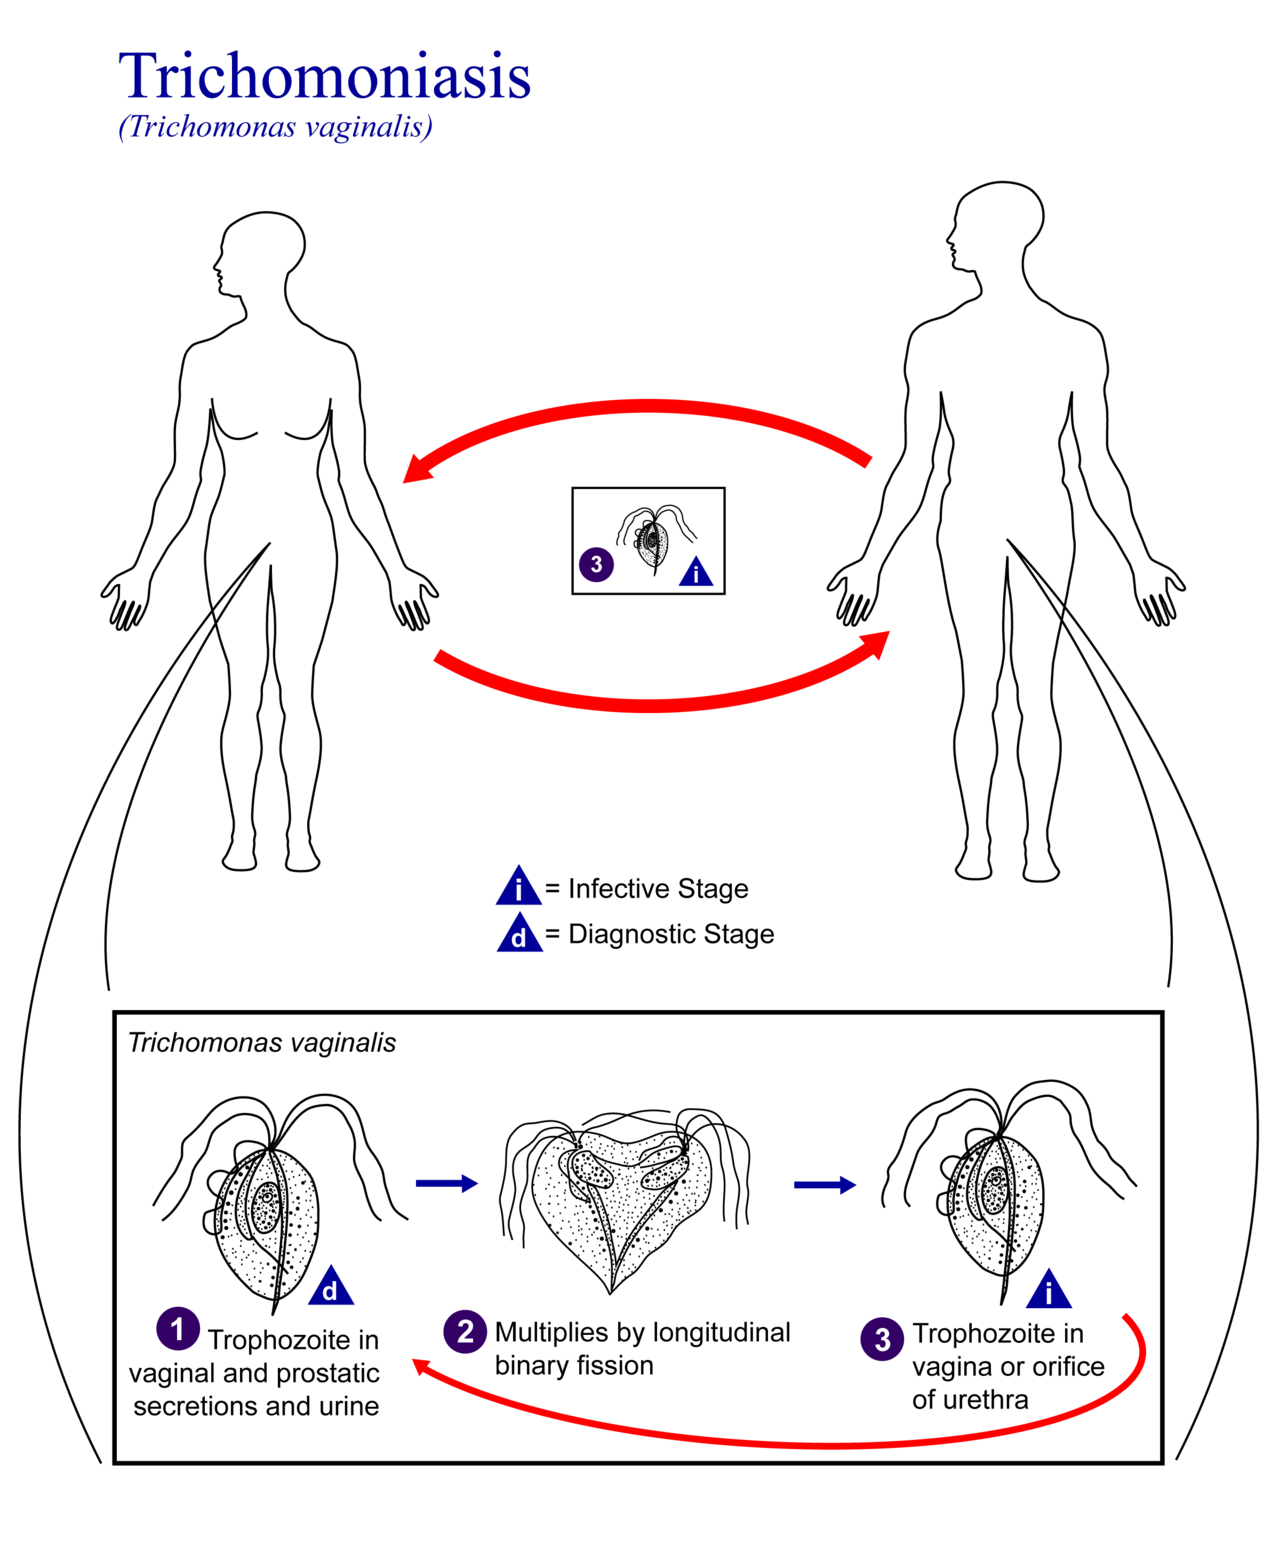 Life cycle of Trichomonas vaginalis (source)